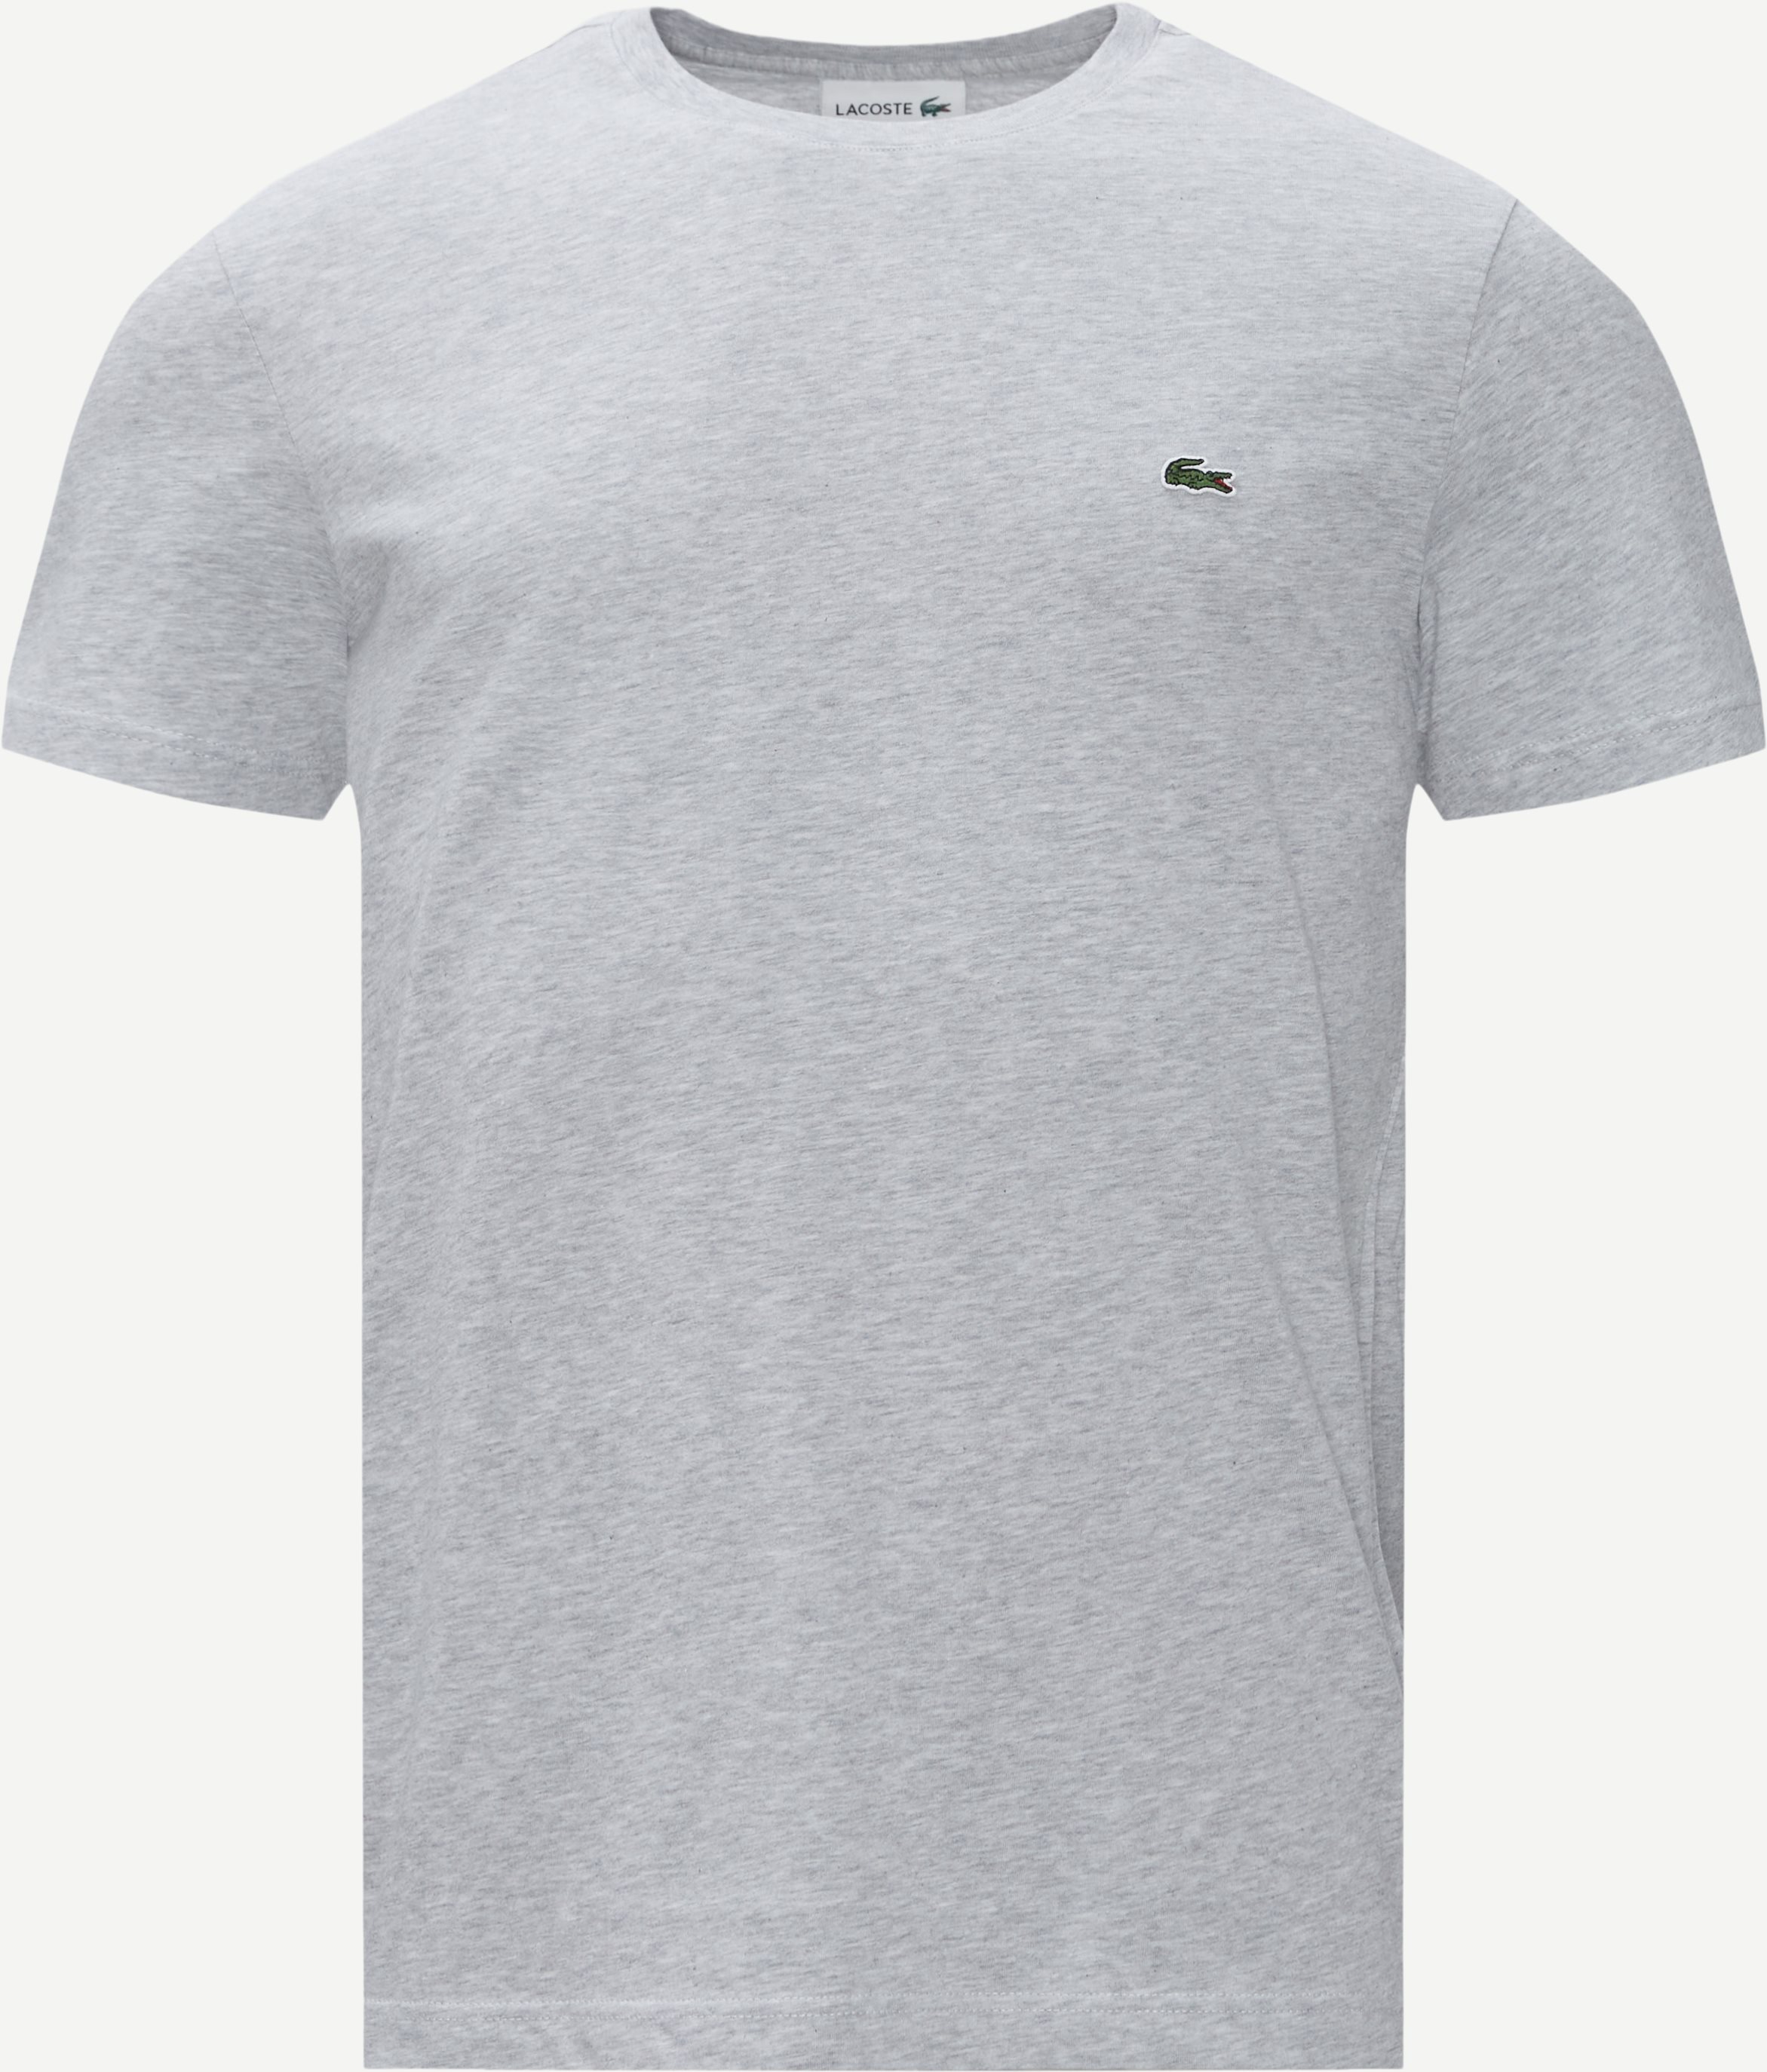 T-shirt - T-shirts - Regular fit - Grey